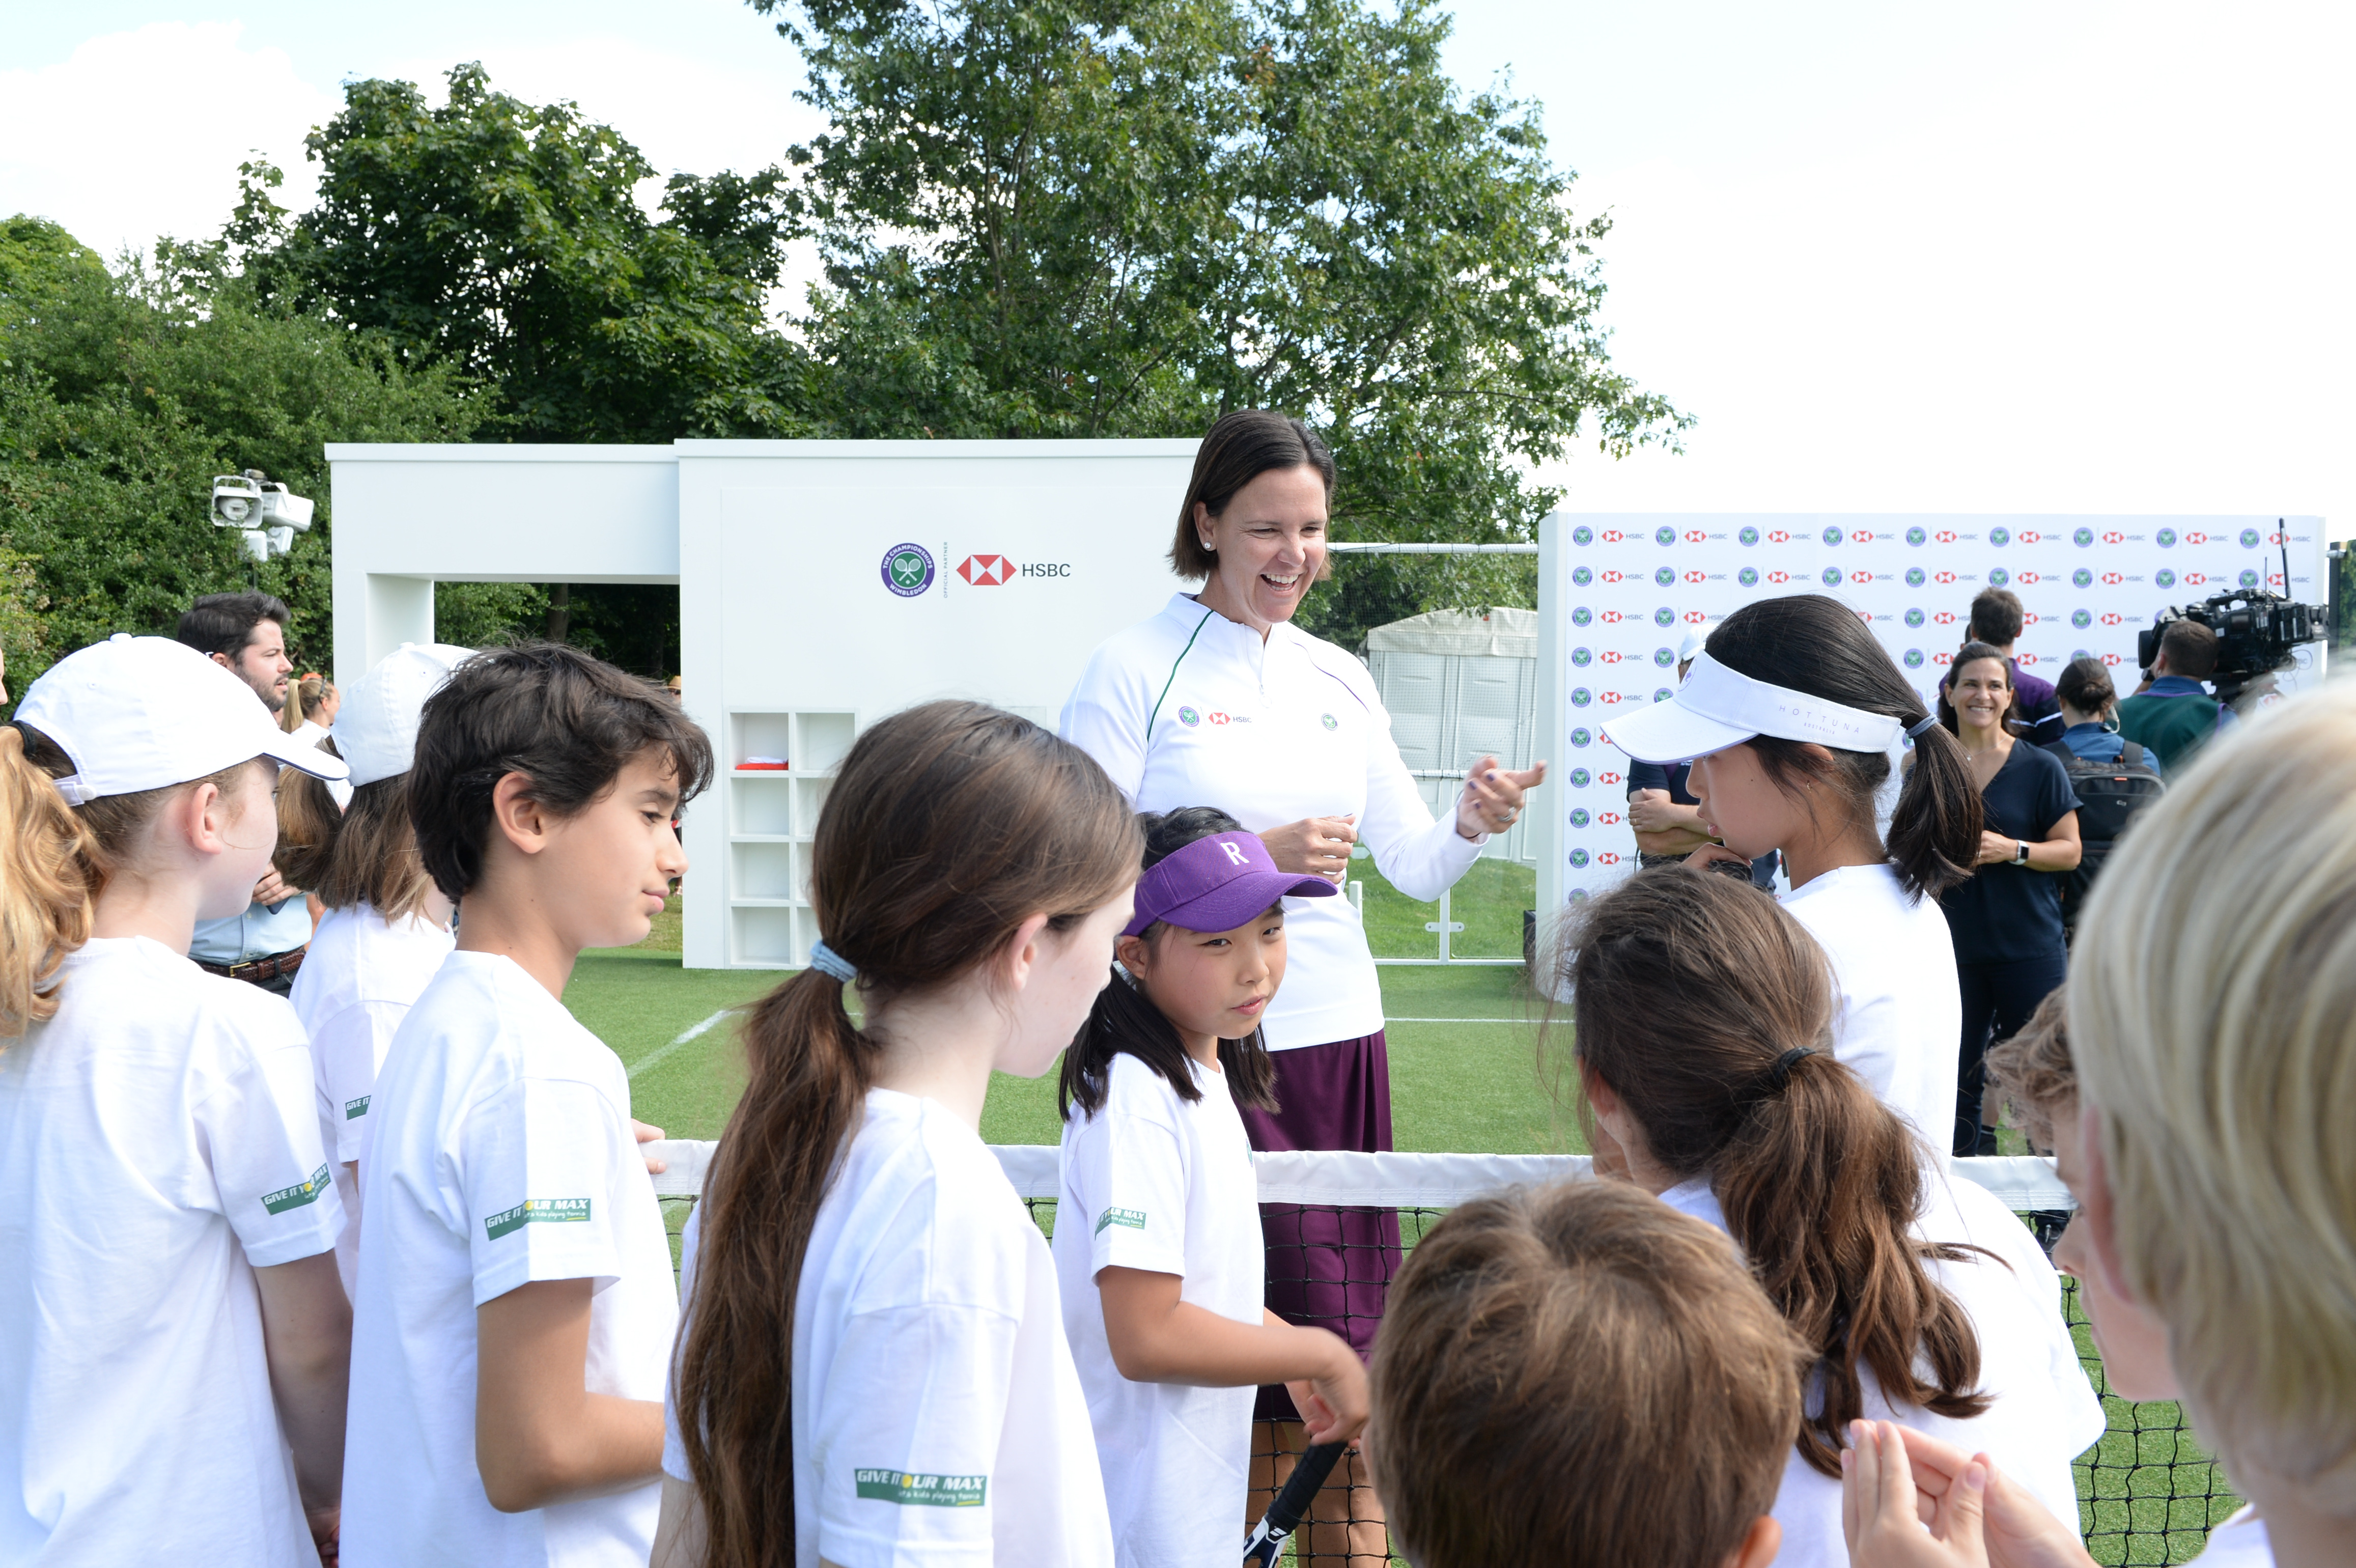 HSBC ambassador Lindsay Davenport meets schoolchildren at Wimbledon